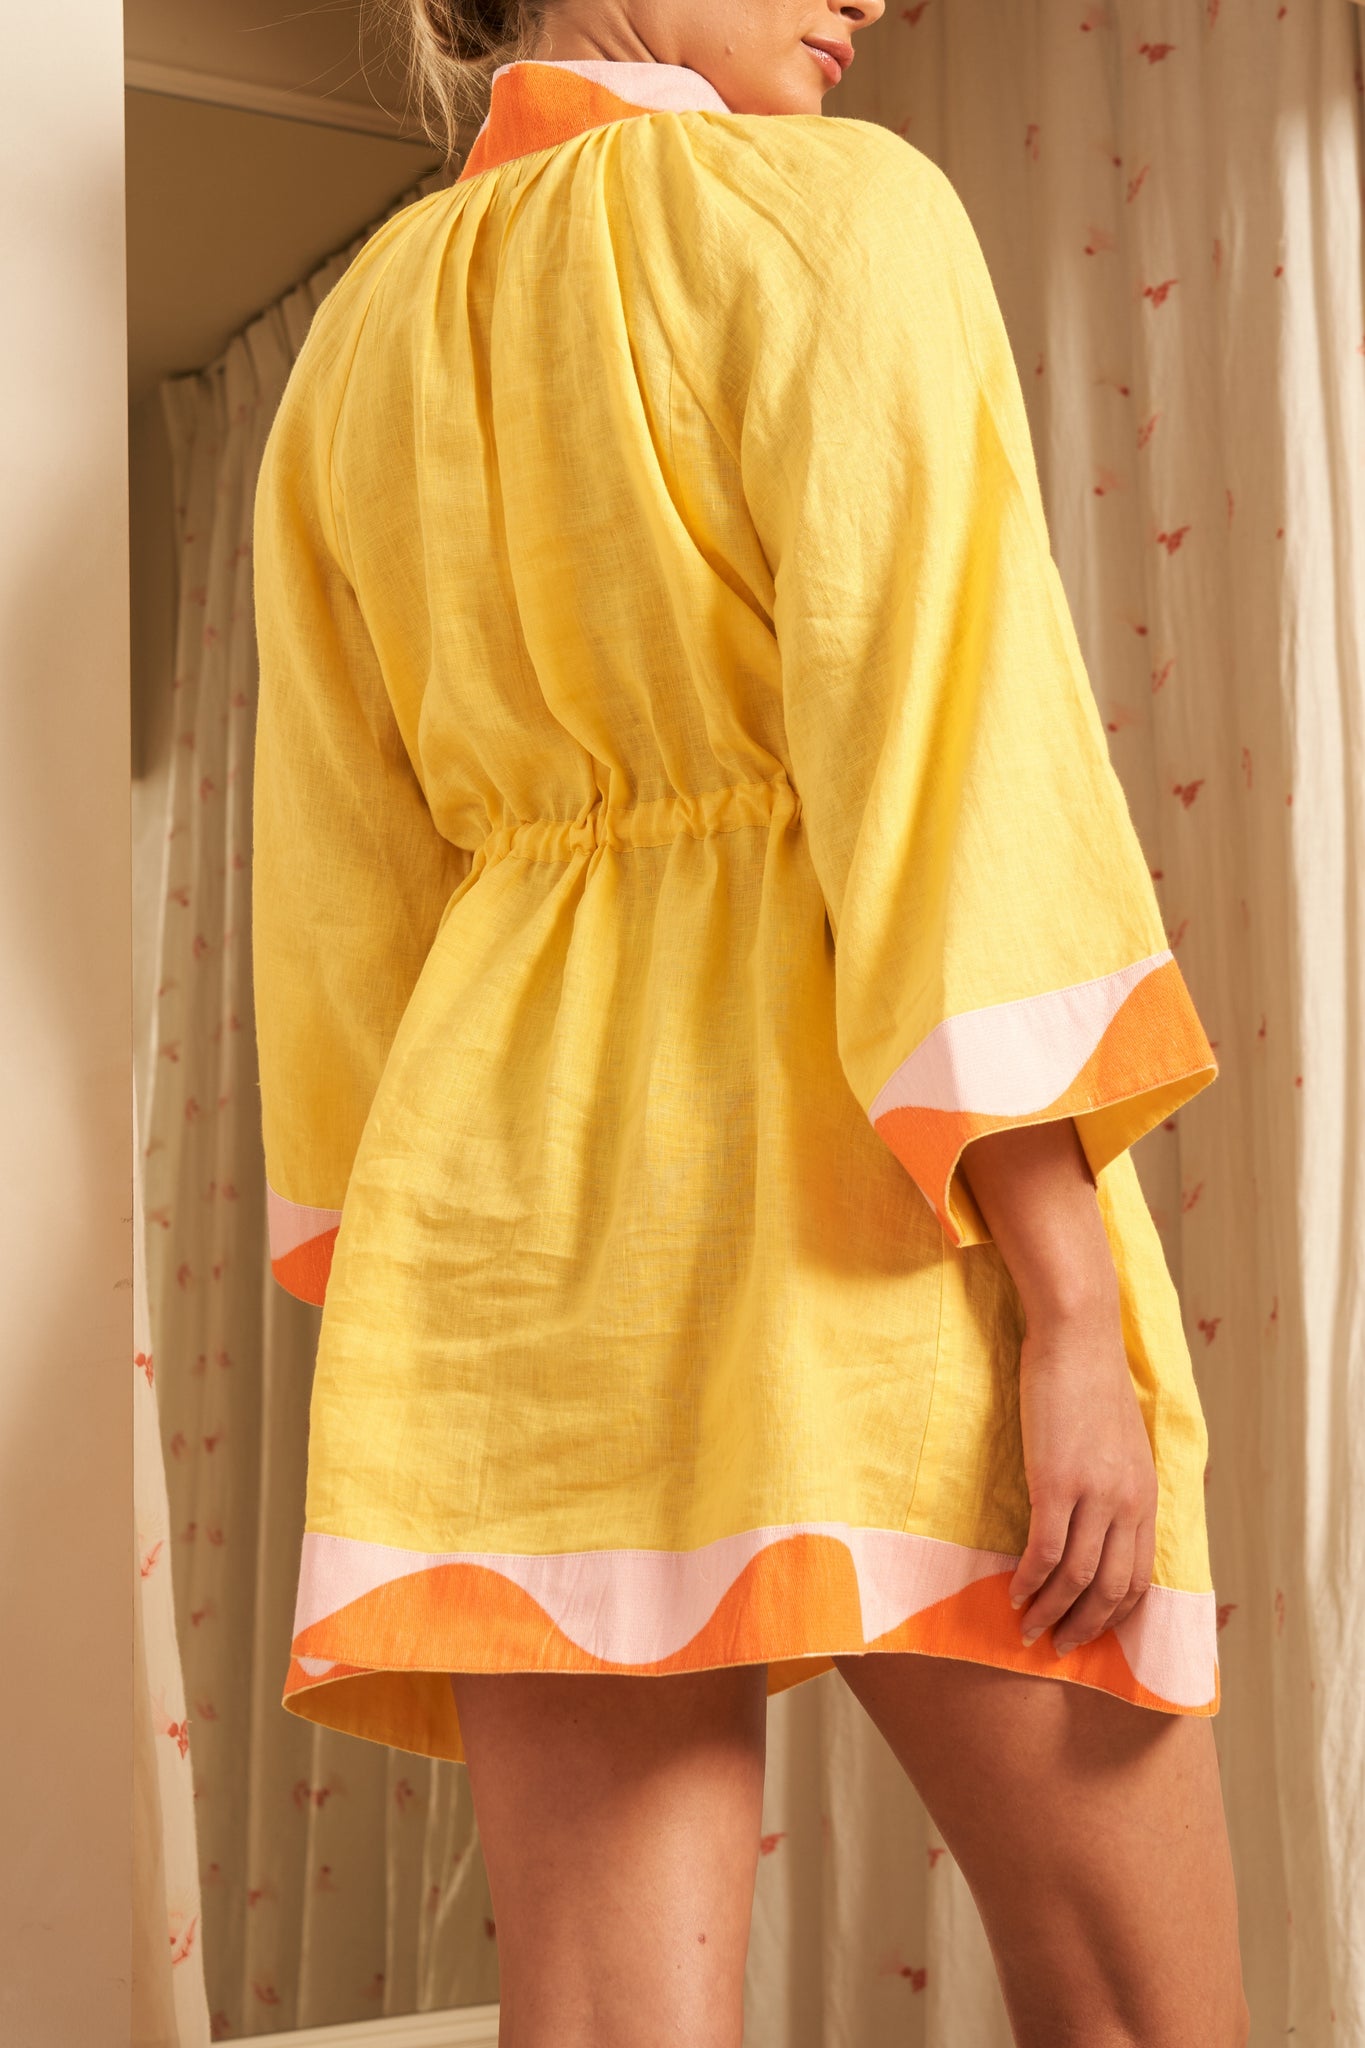 PAULA embroidered wide-sleeve kaftan dress - Yellow